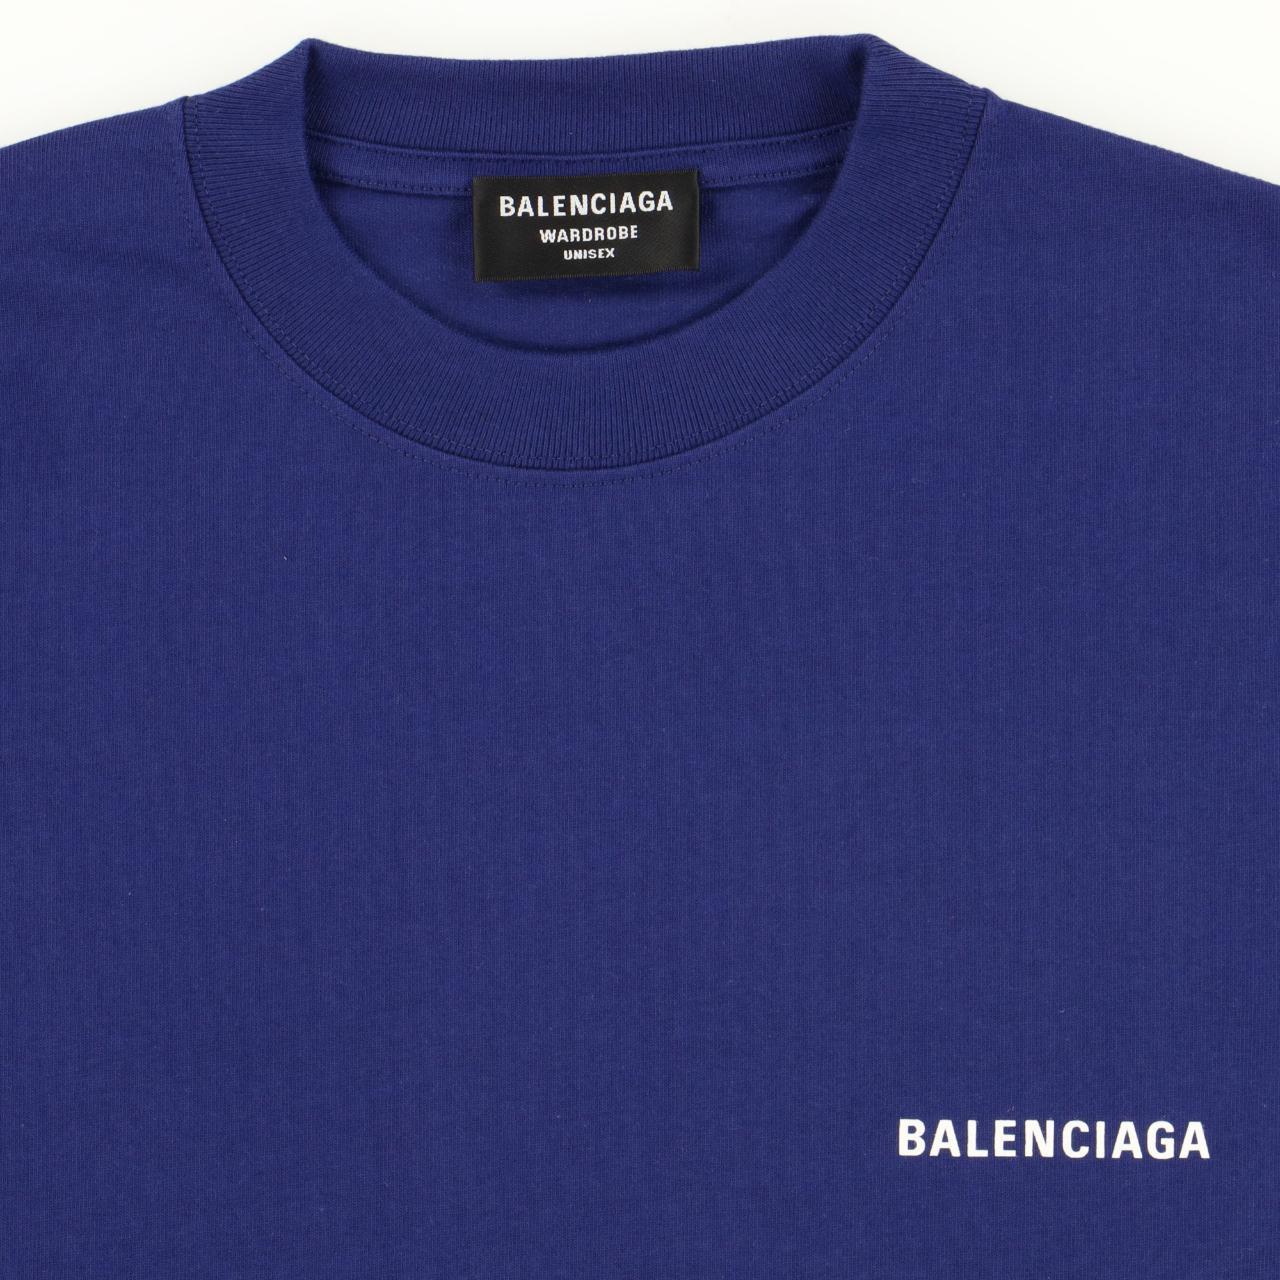 Product Image 3 - Balenciaga Blue Logo Print T-Shirt

-Size